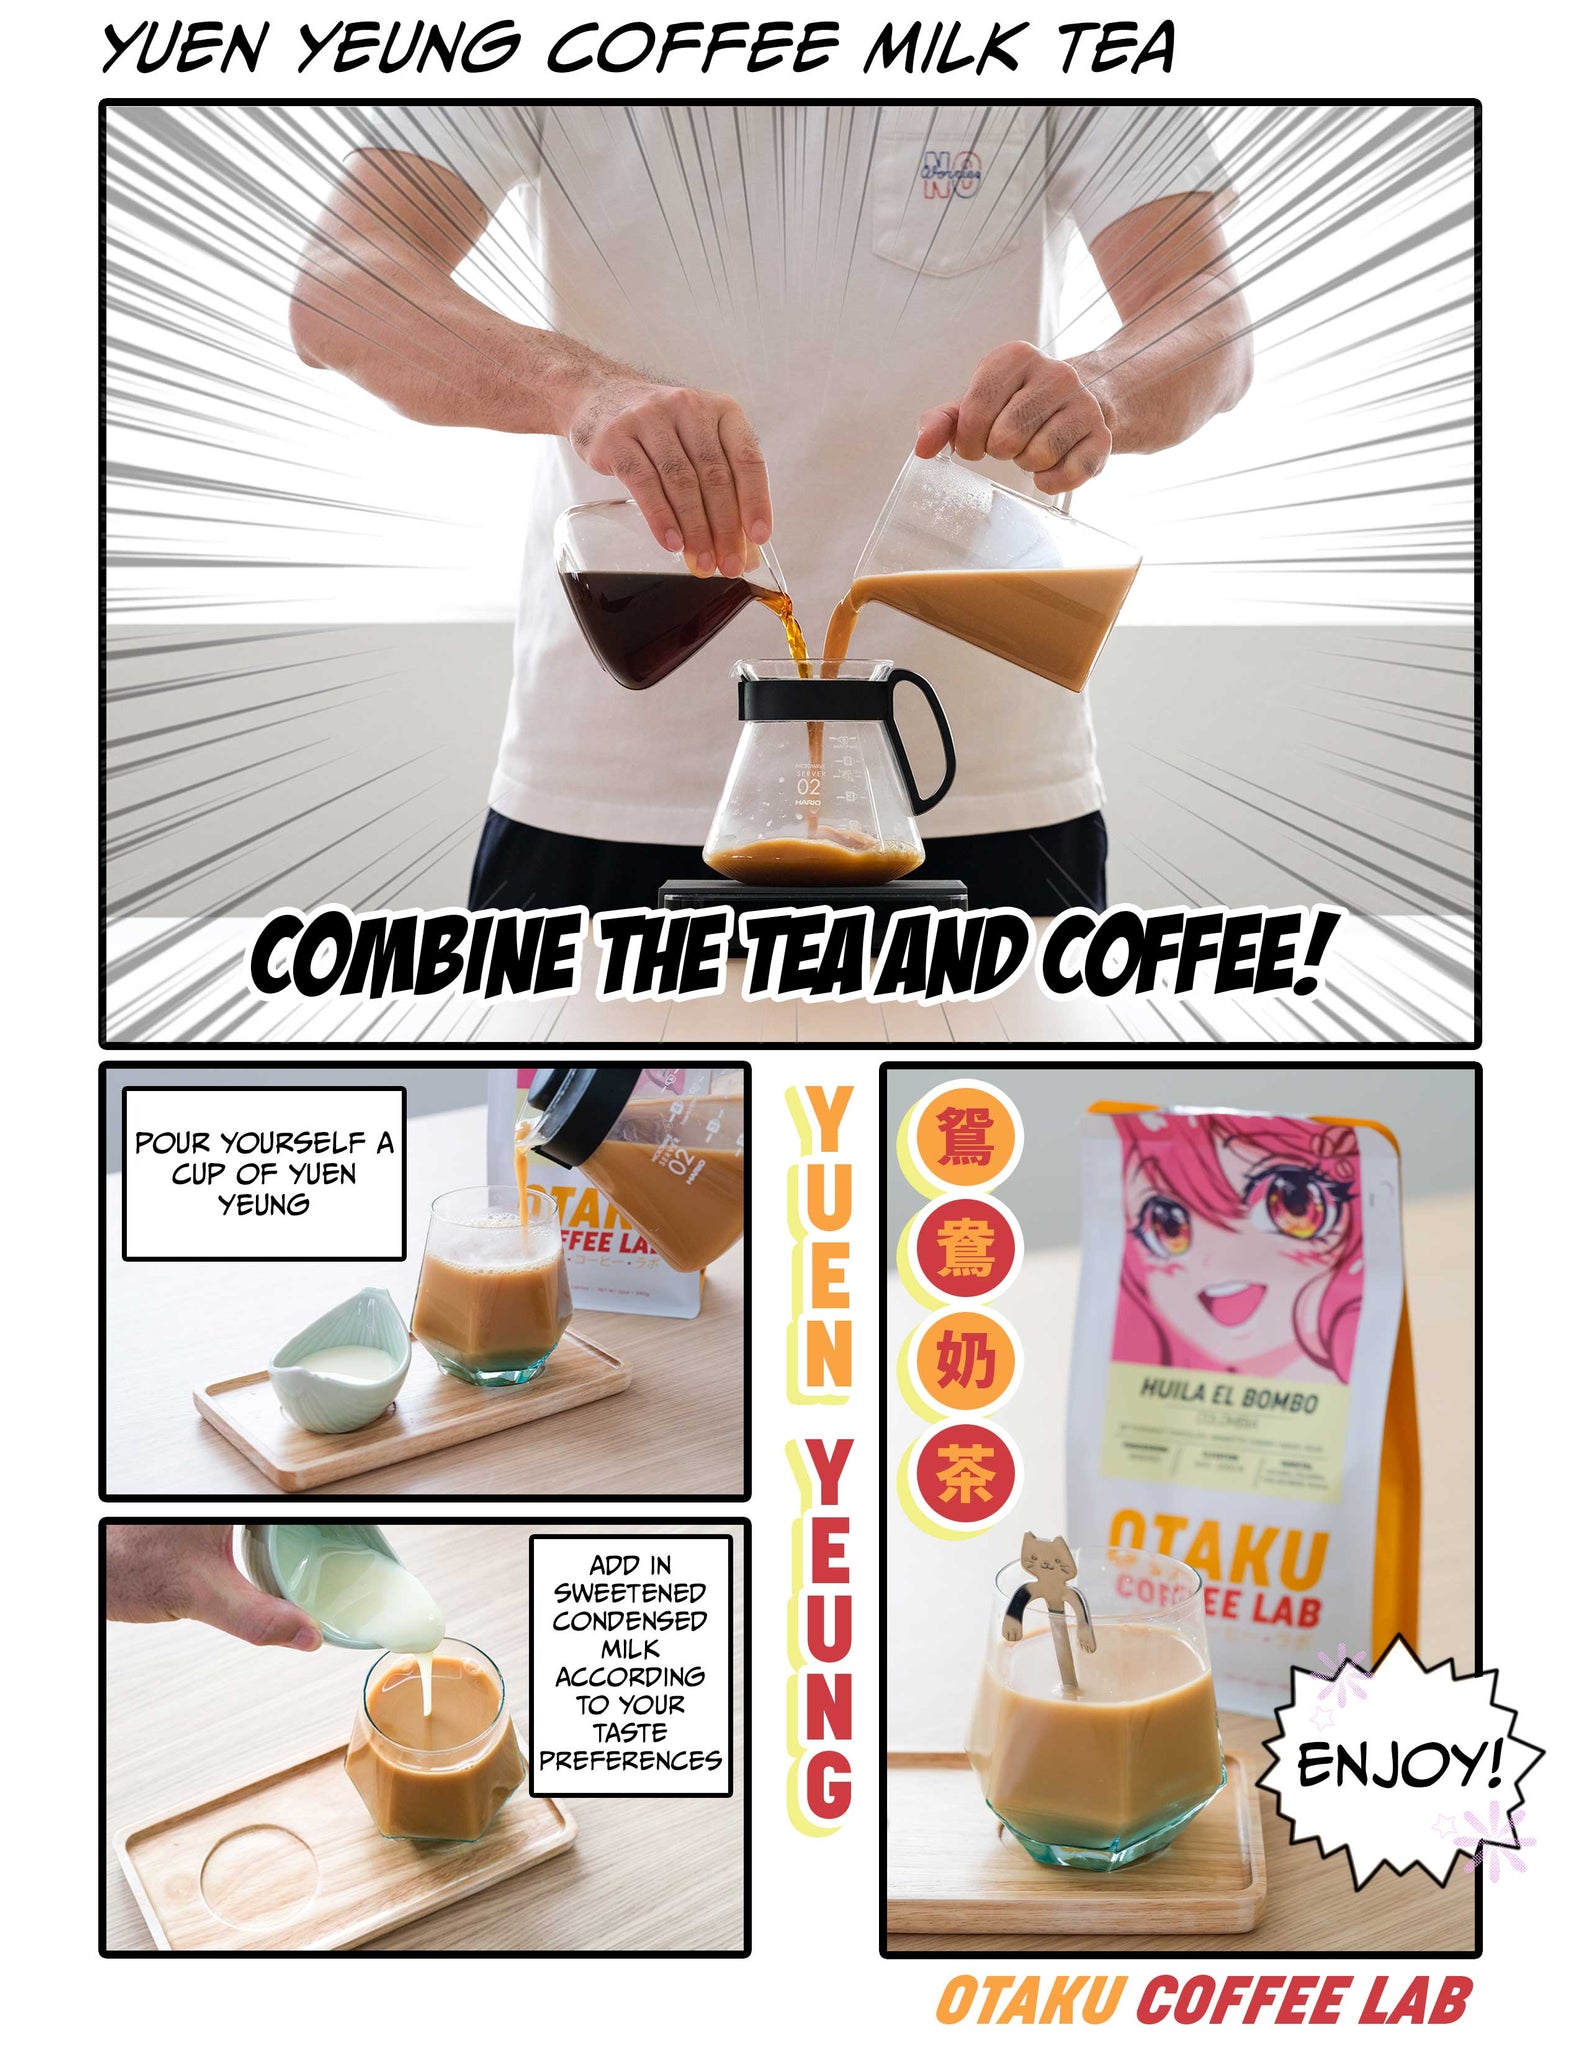 Otaku Coffee Lab coffee recipe manga illustrating how to make yuen yeung coffee milk tea part two